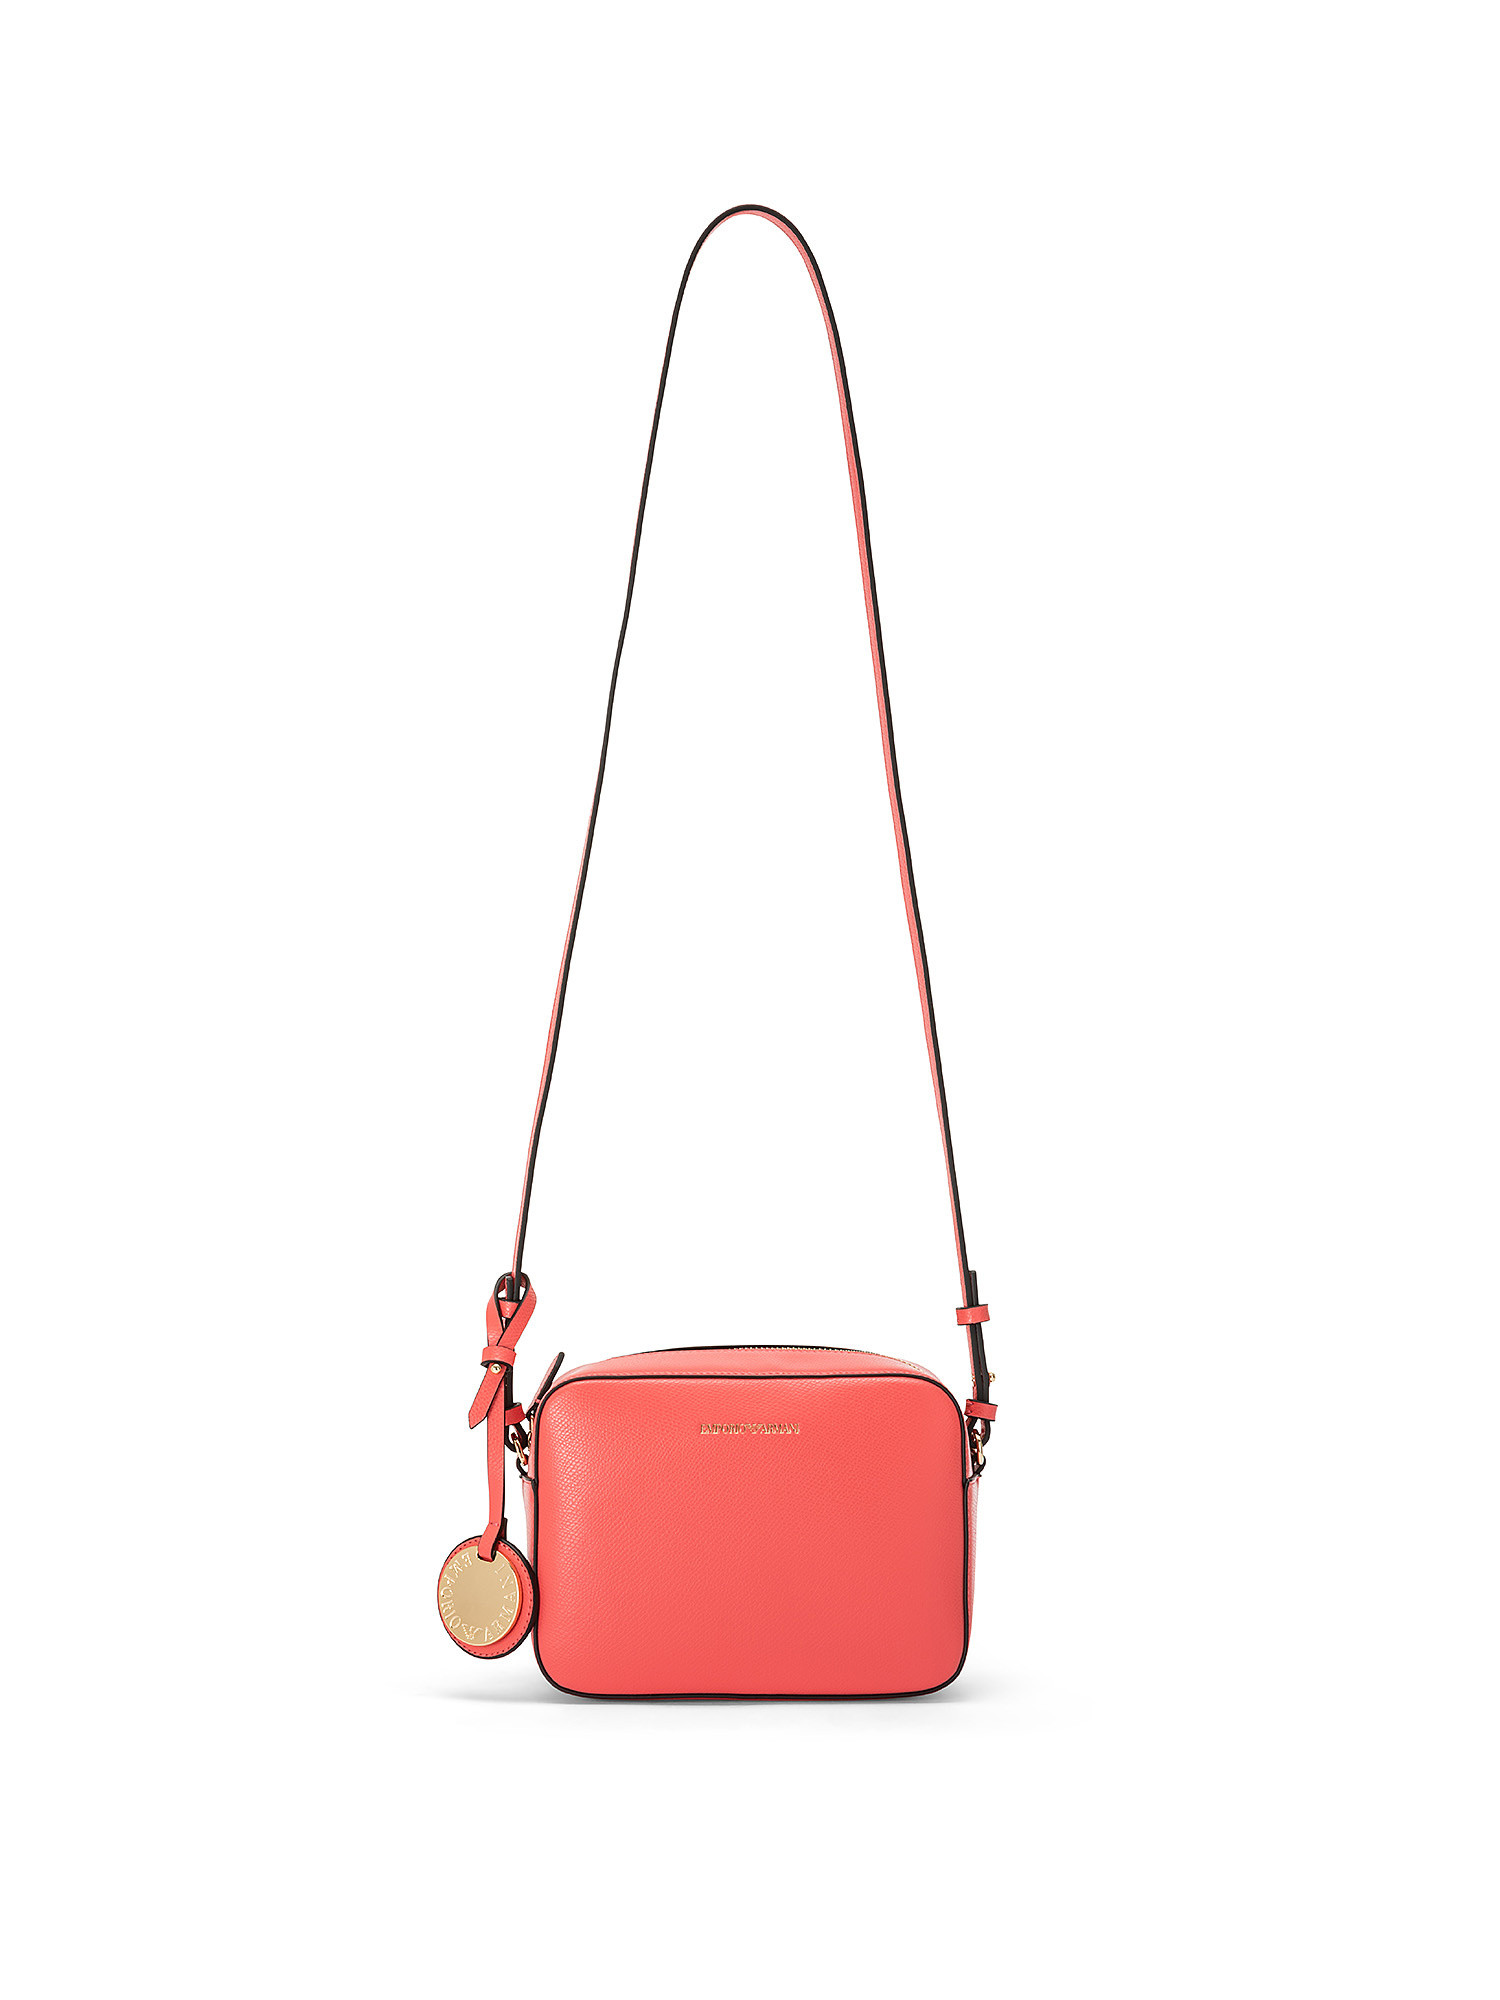 Mini bag, Coral Red, large image number 0